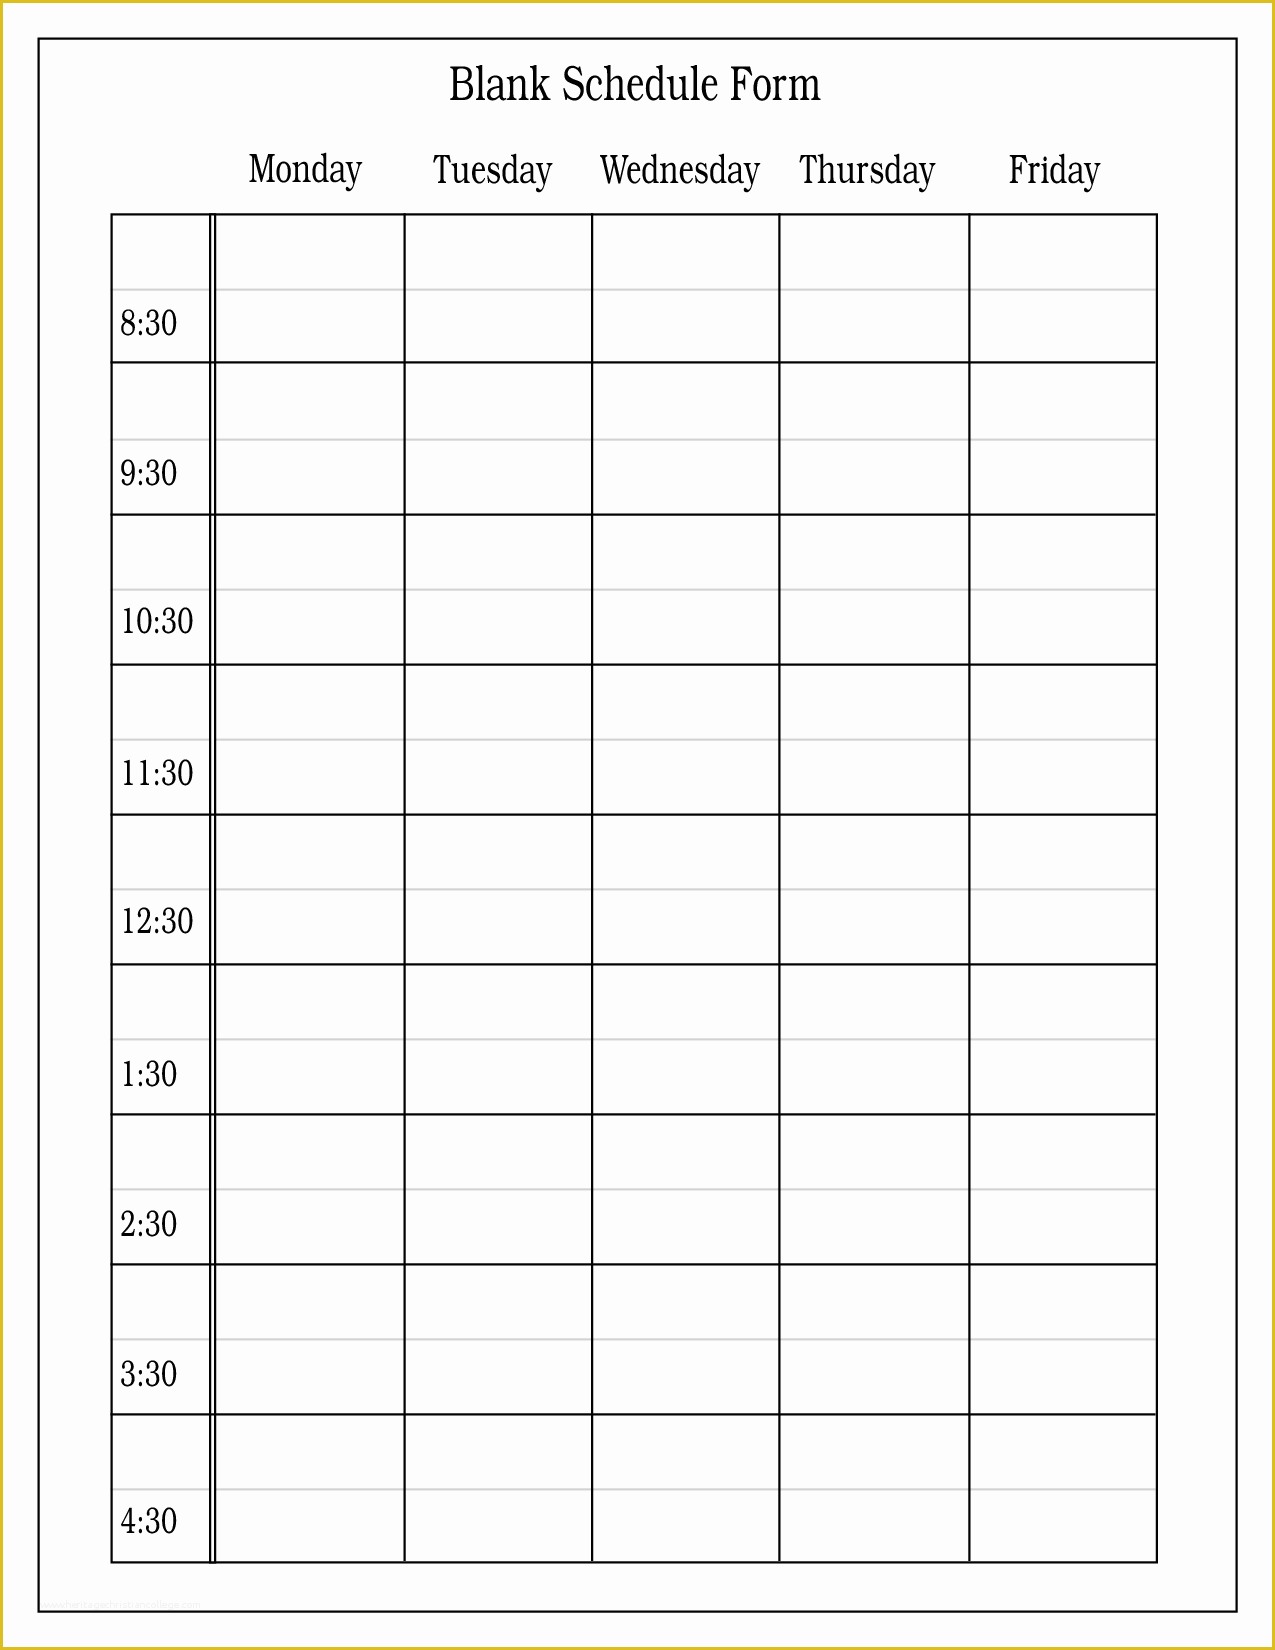 Free Employee Schedule Template Of Employee Scheduling A Free Employee Schedule